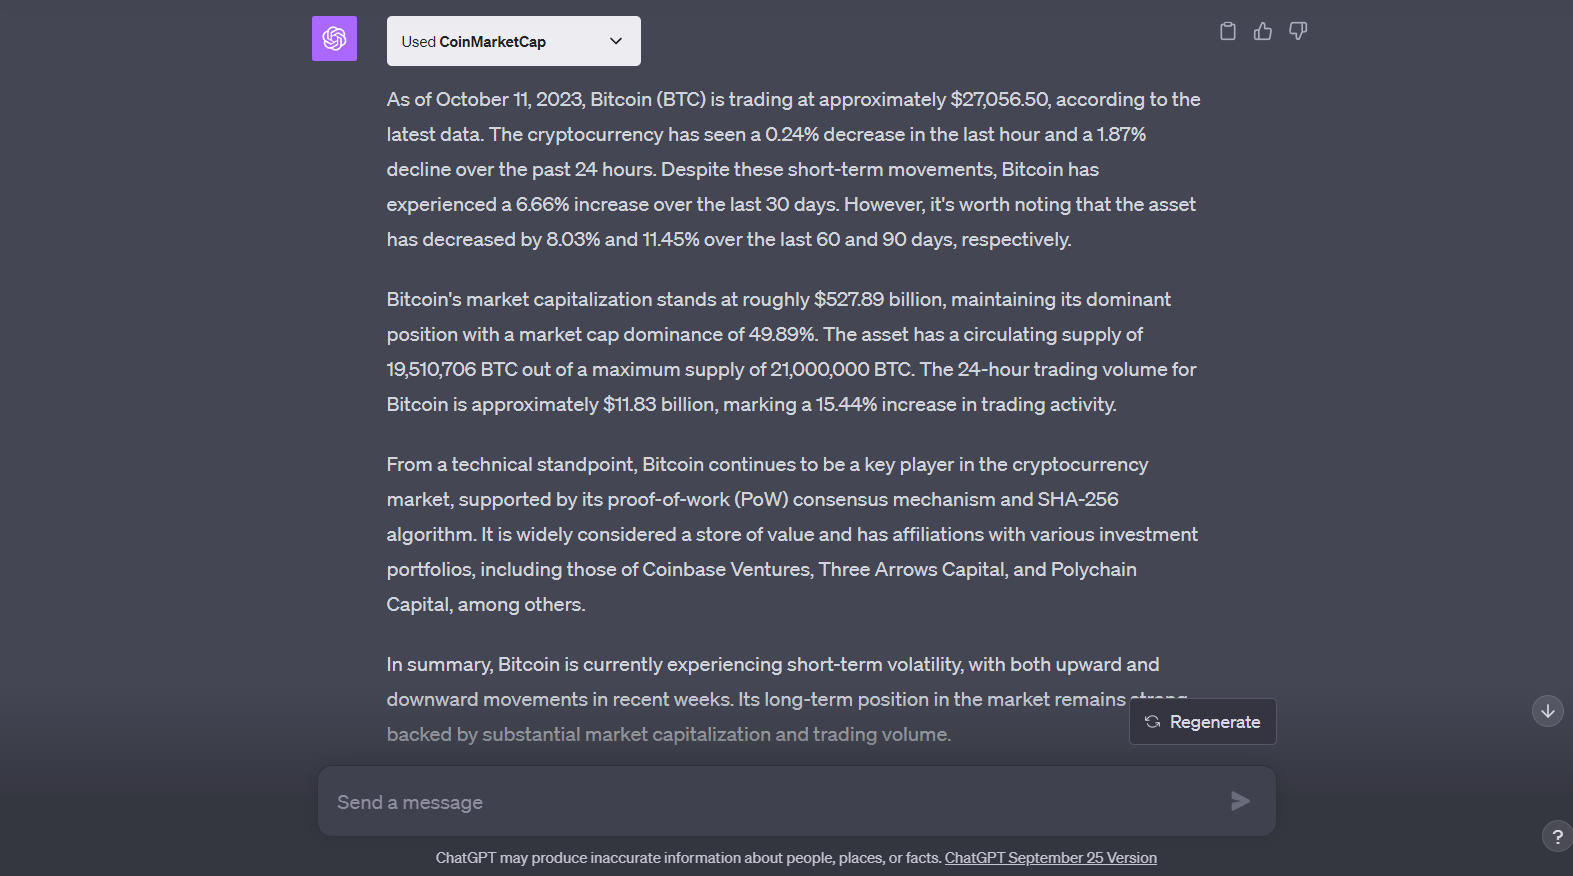 Bitcoin-Analyse Des Coinmarketcap Chatgpt-Plugins